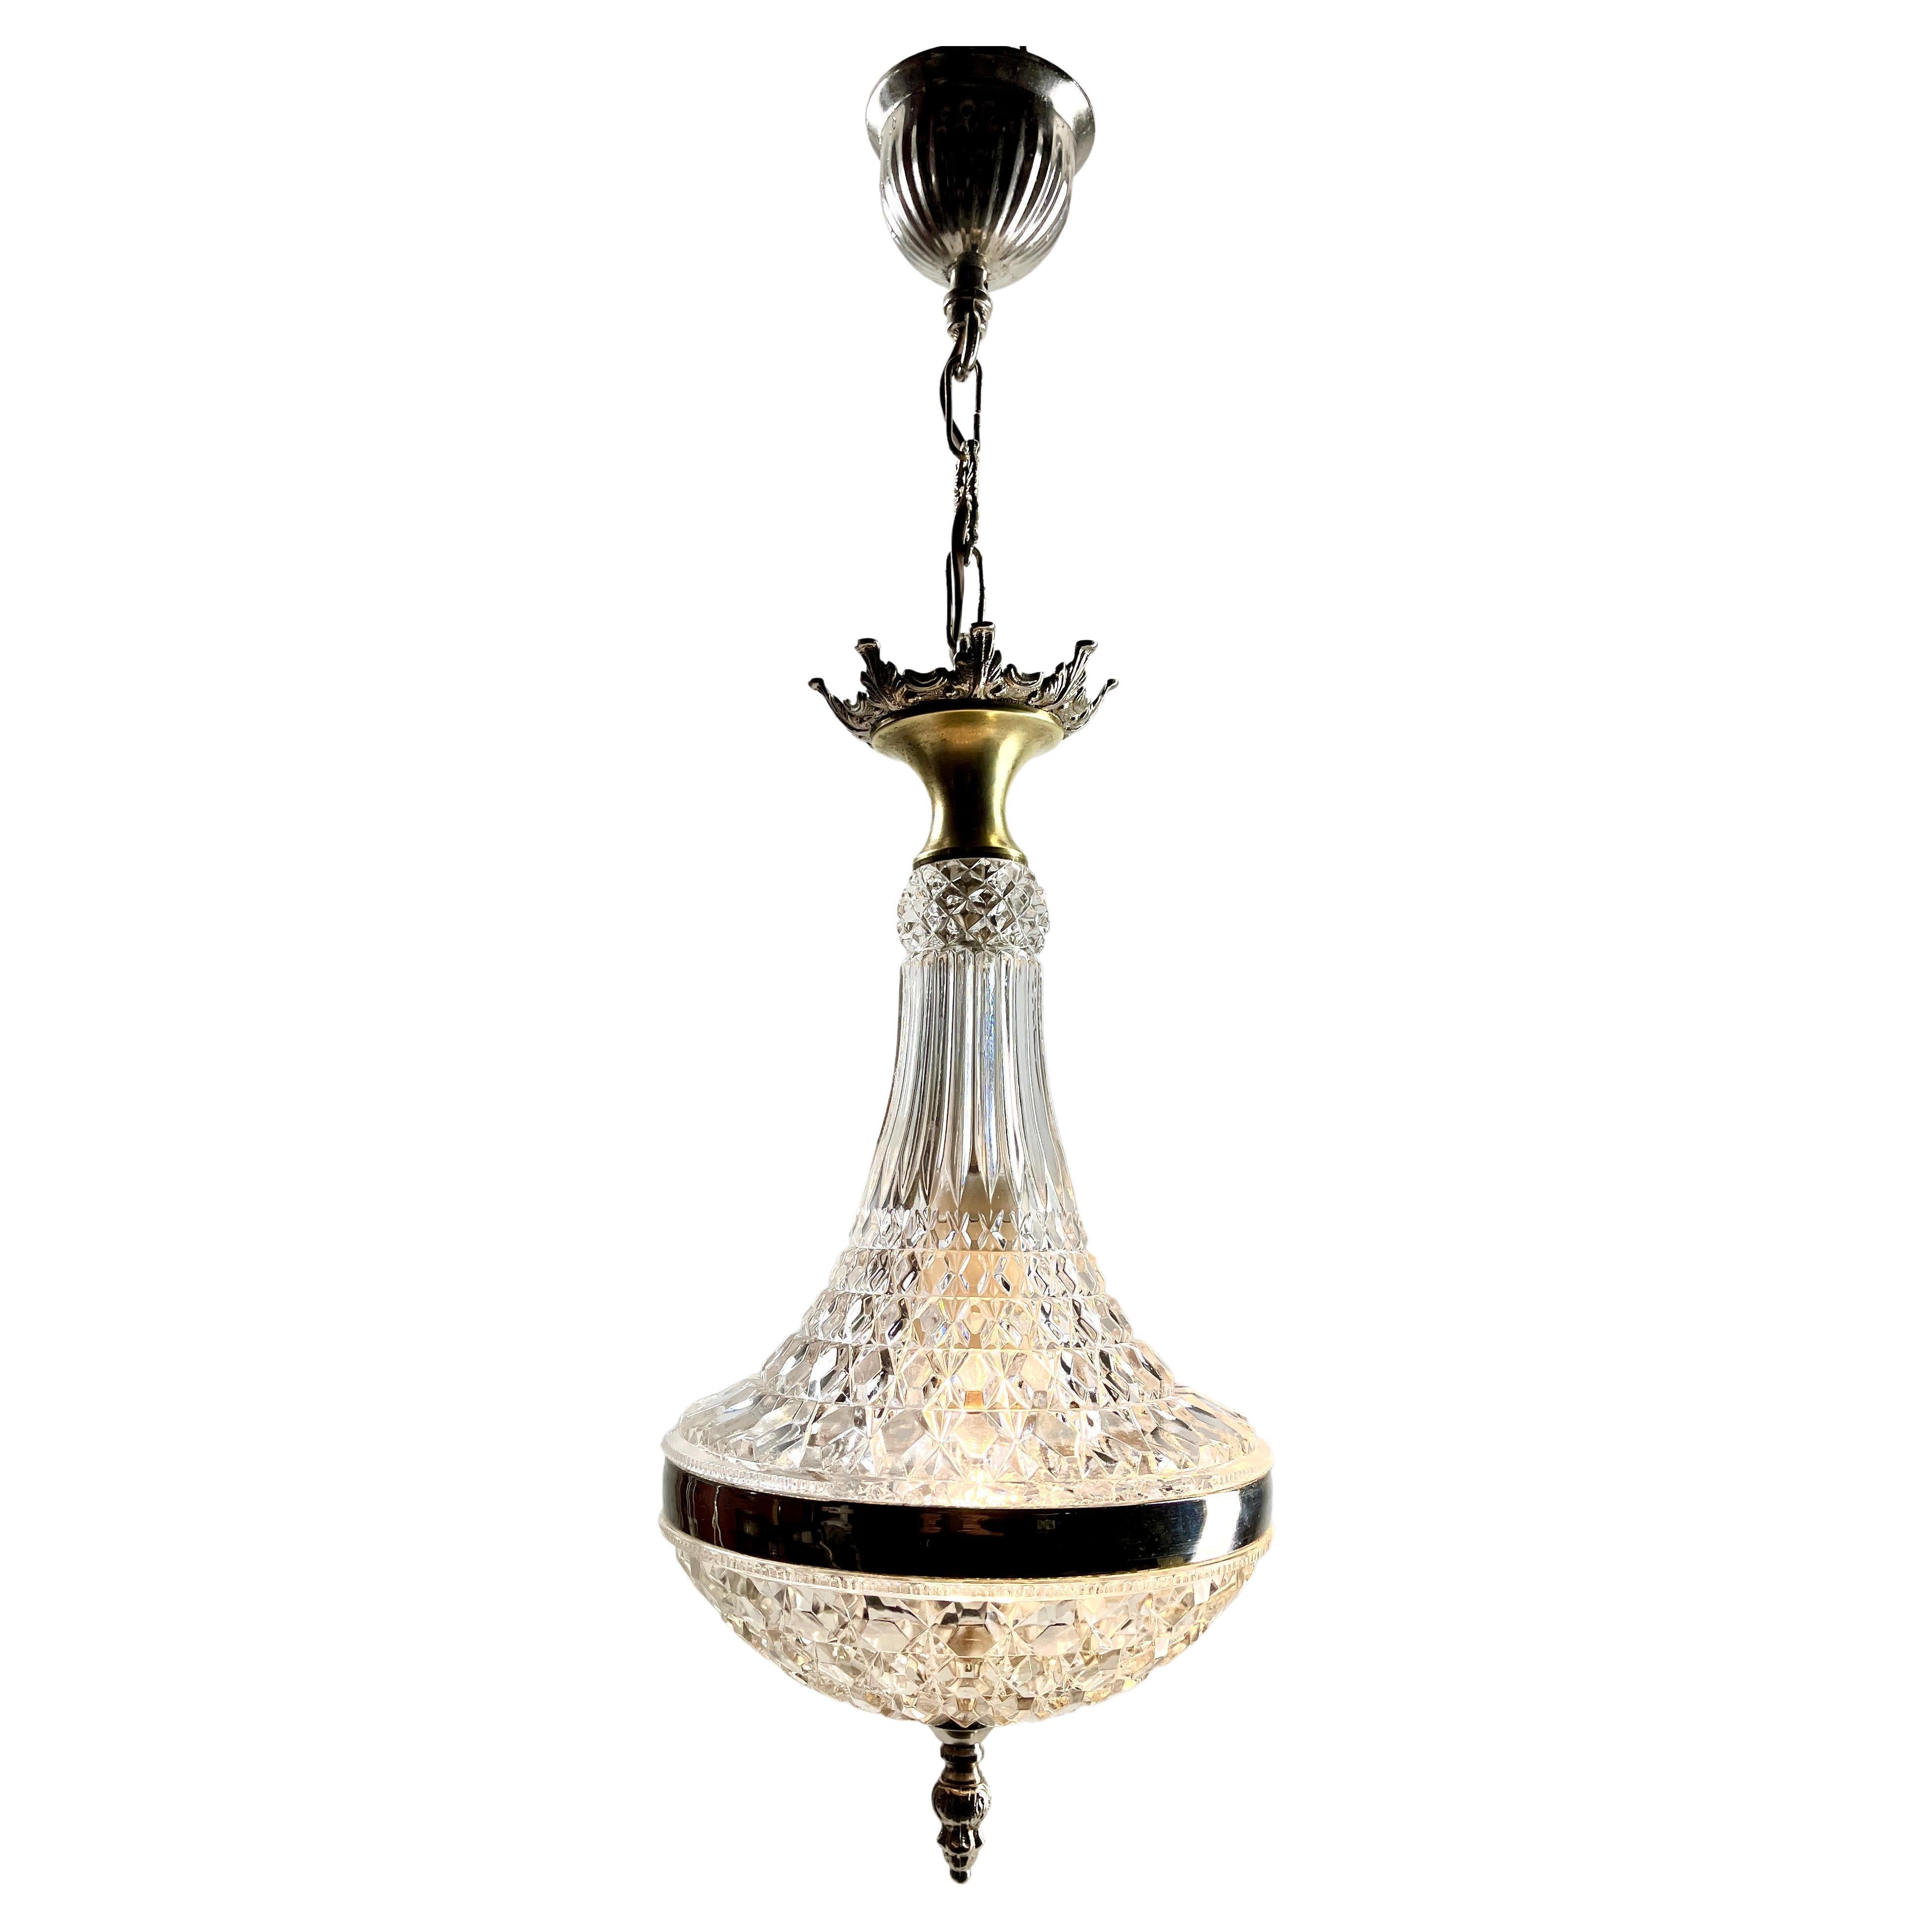 Art Deco Halophane Ceiling Lamp, Scailmont Belgium Glass Shade, 1930s